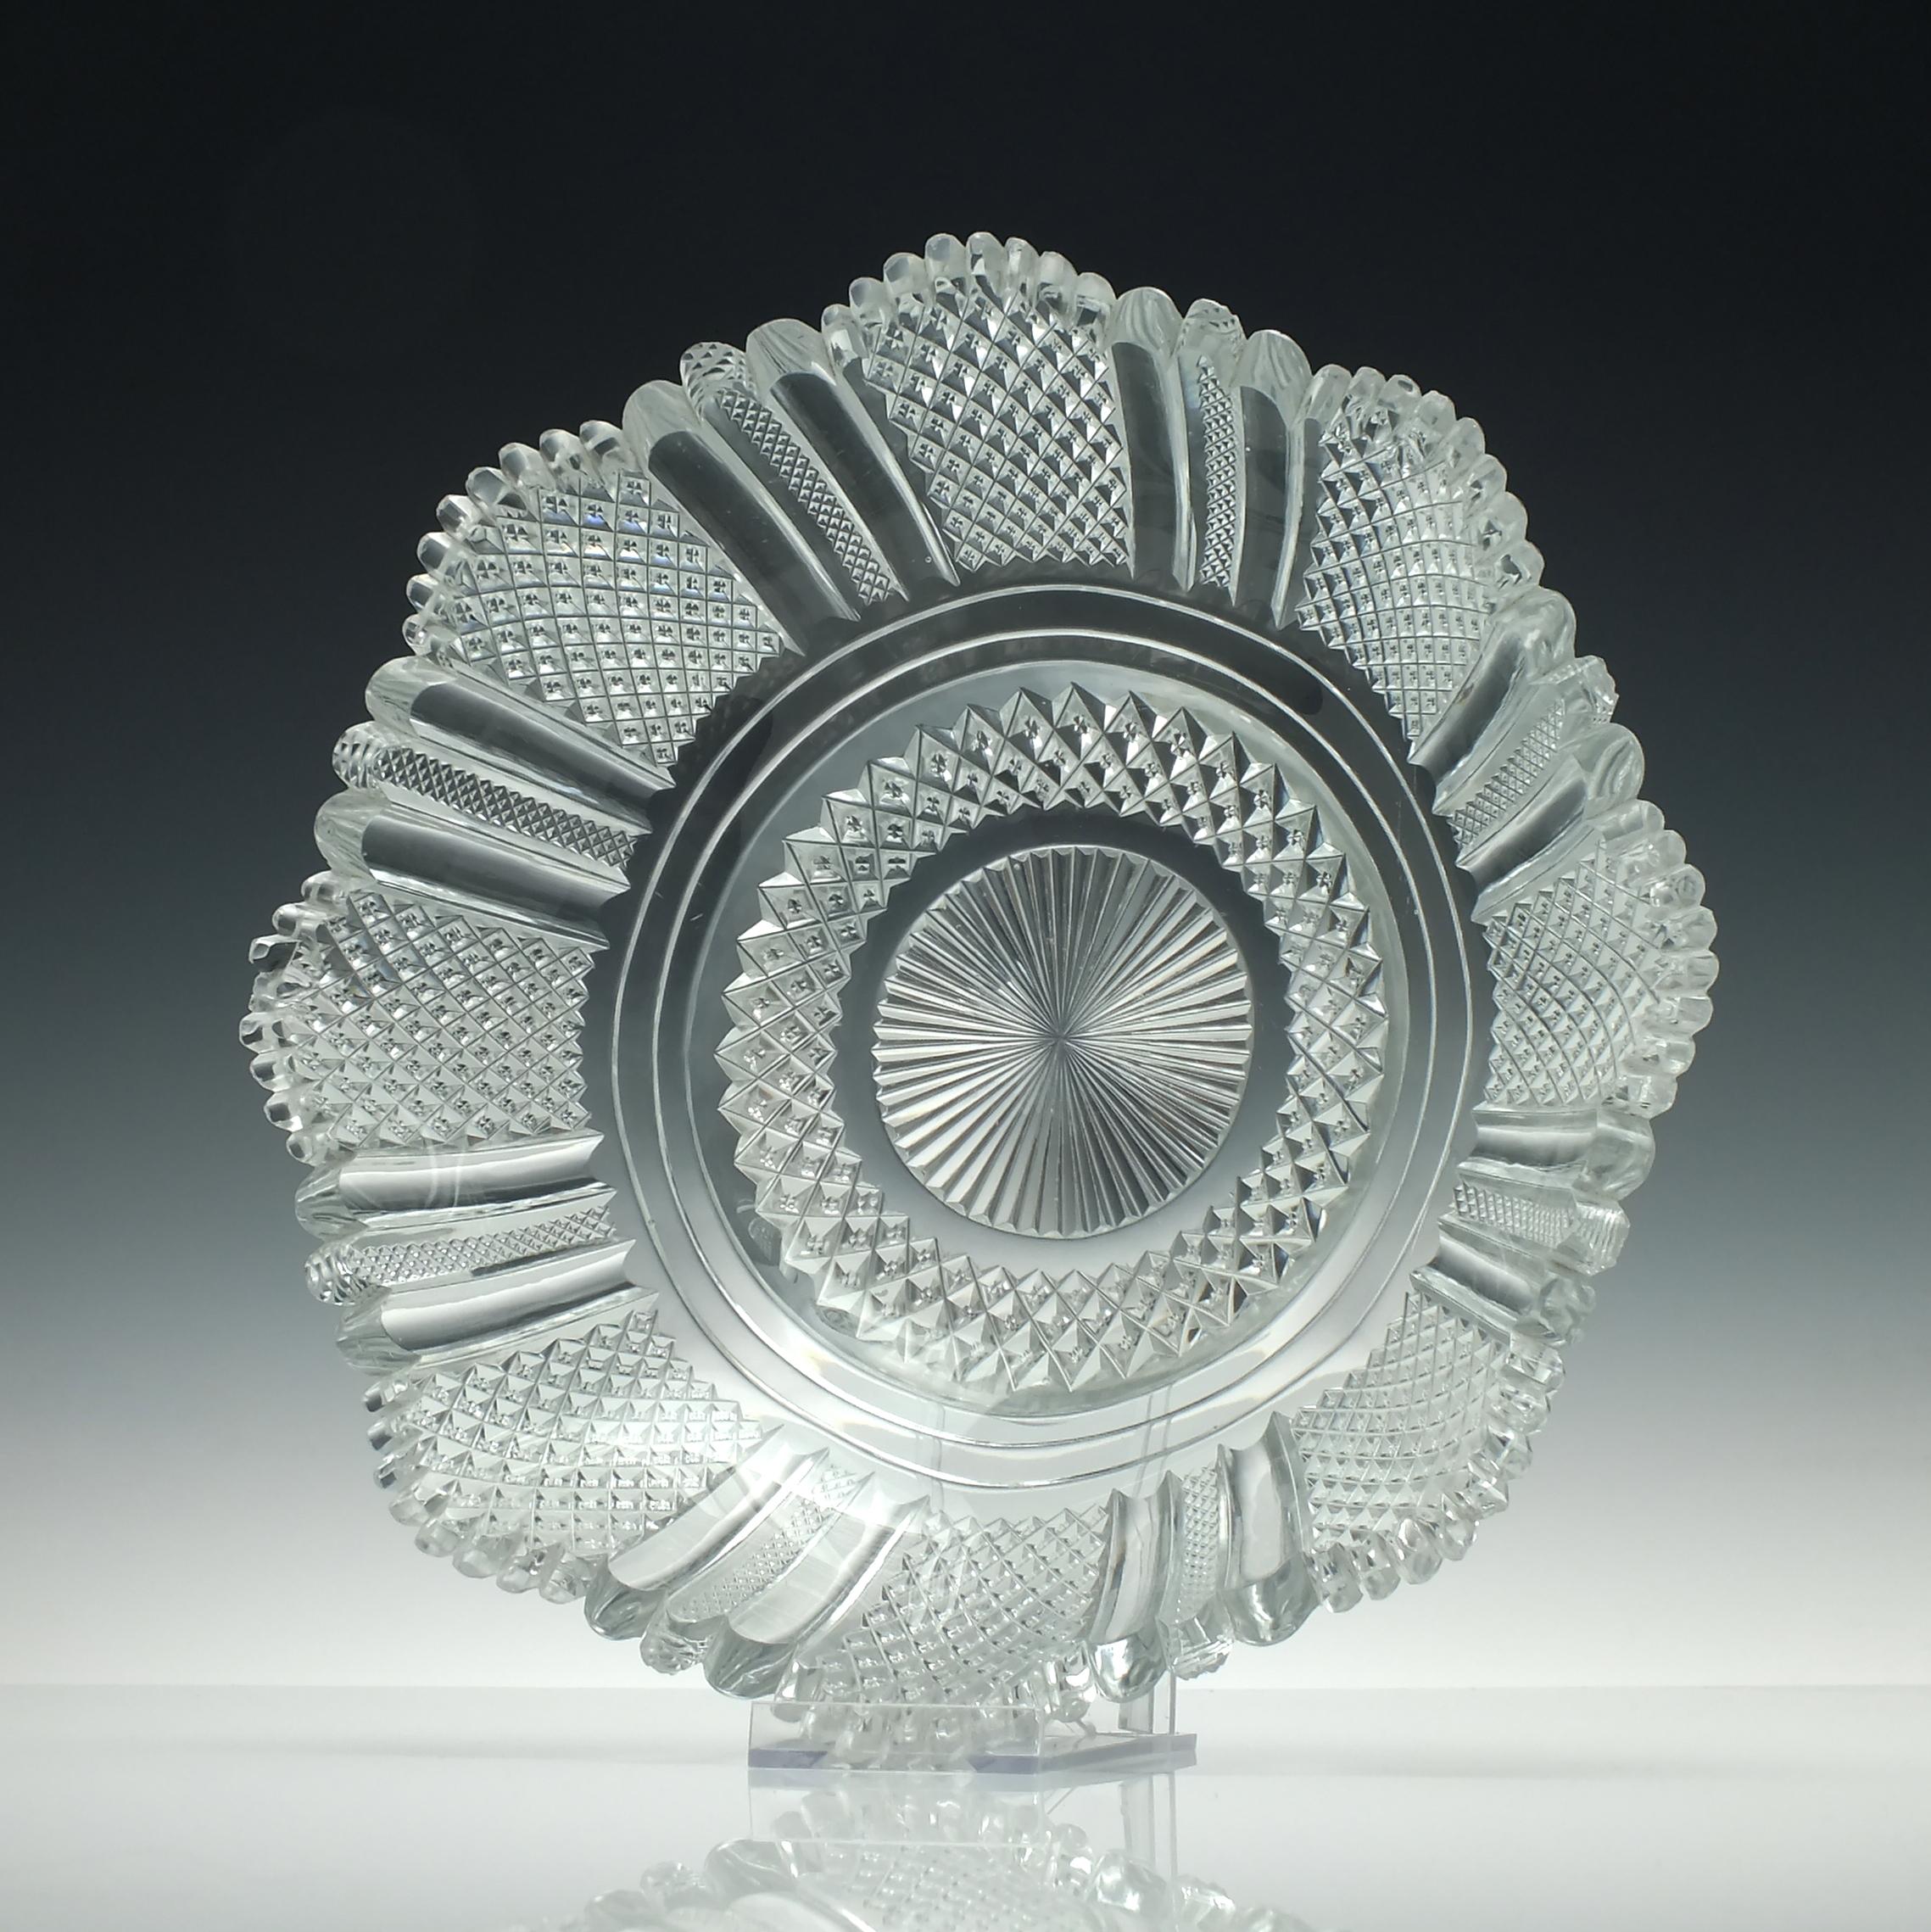 Mid-19th Century Irish Waterford Cut Glass Serving Bowl, circa 1830